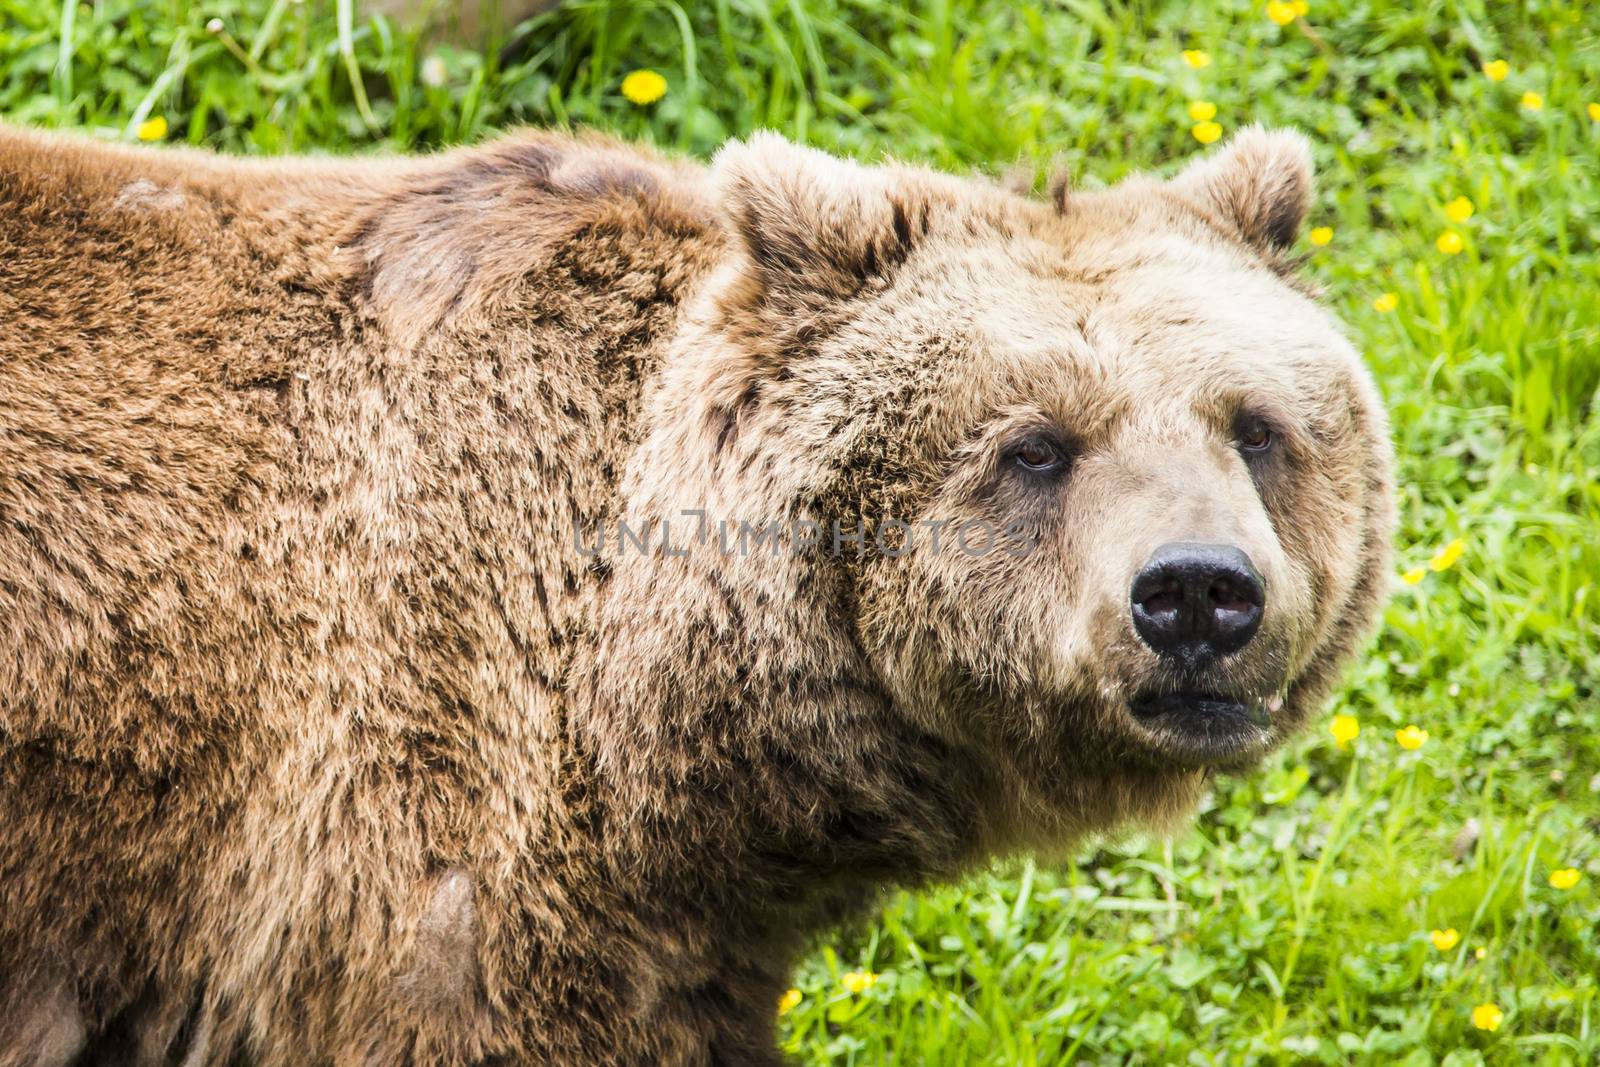 Brown bear Ursus arctos in its own envirnment